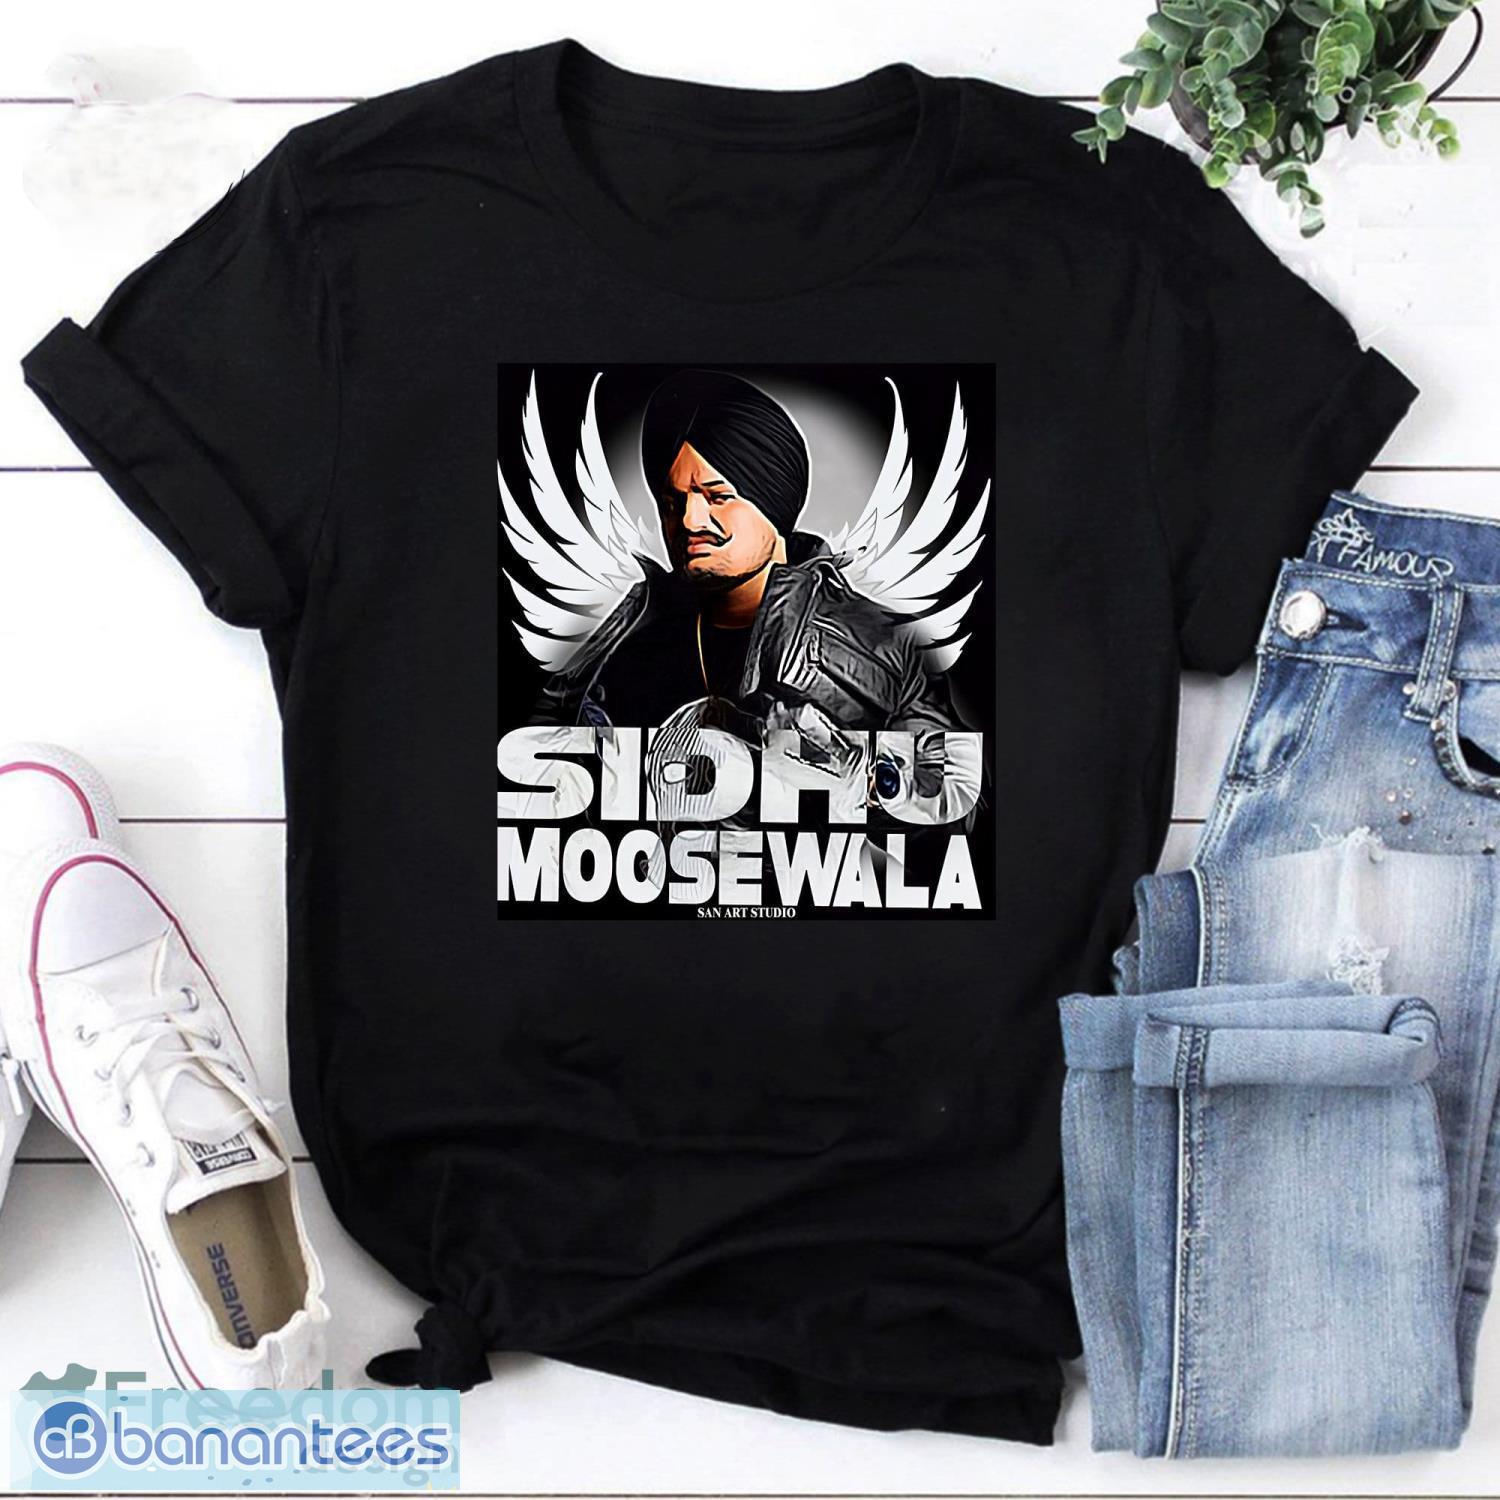 Legend Never Die Unique TShirt Sidhu Moose Wala Indian Rapper Comfortable  New Design Gift Idea T Shirt Short Sleeve Ofertas